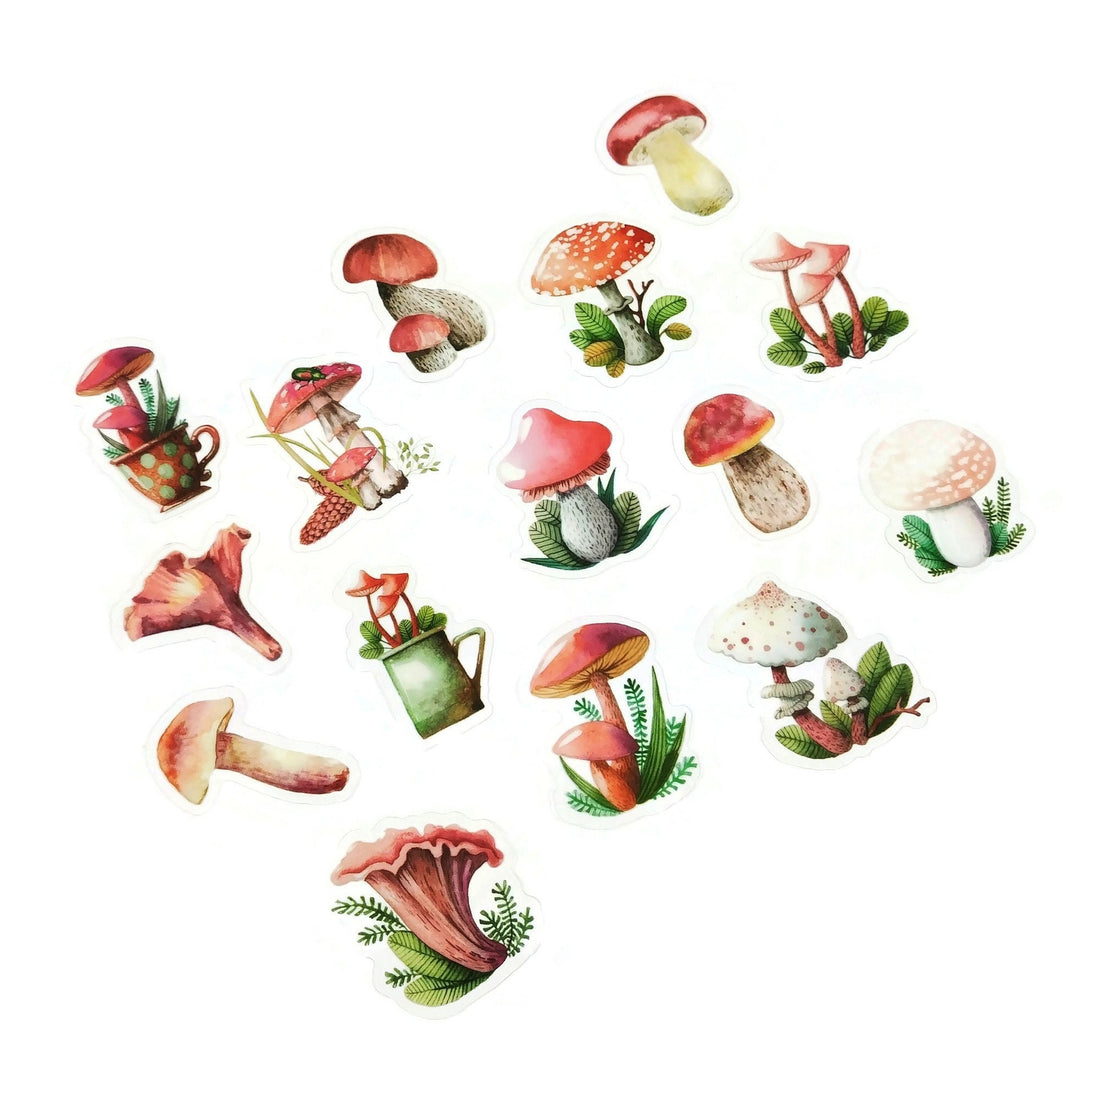 Pinky mushroom sticker pack - 15 cute botanical stickers - Cottagecore journal planner